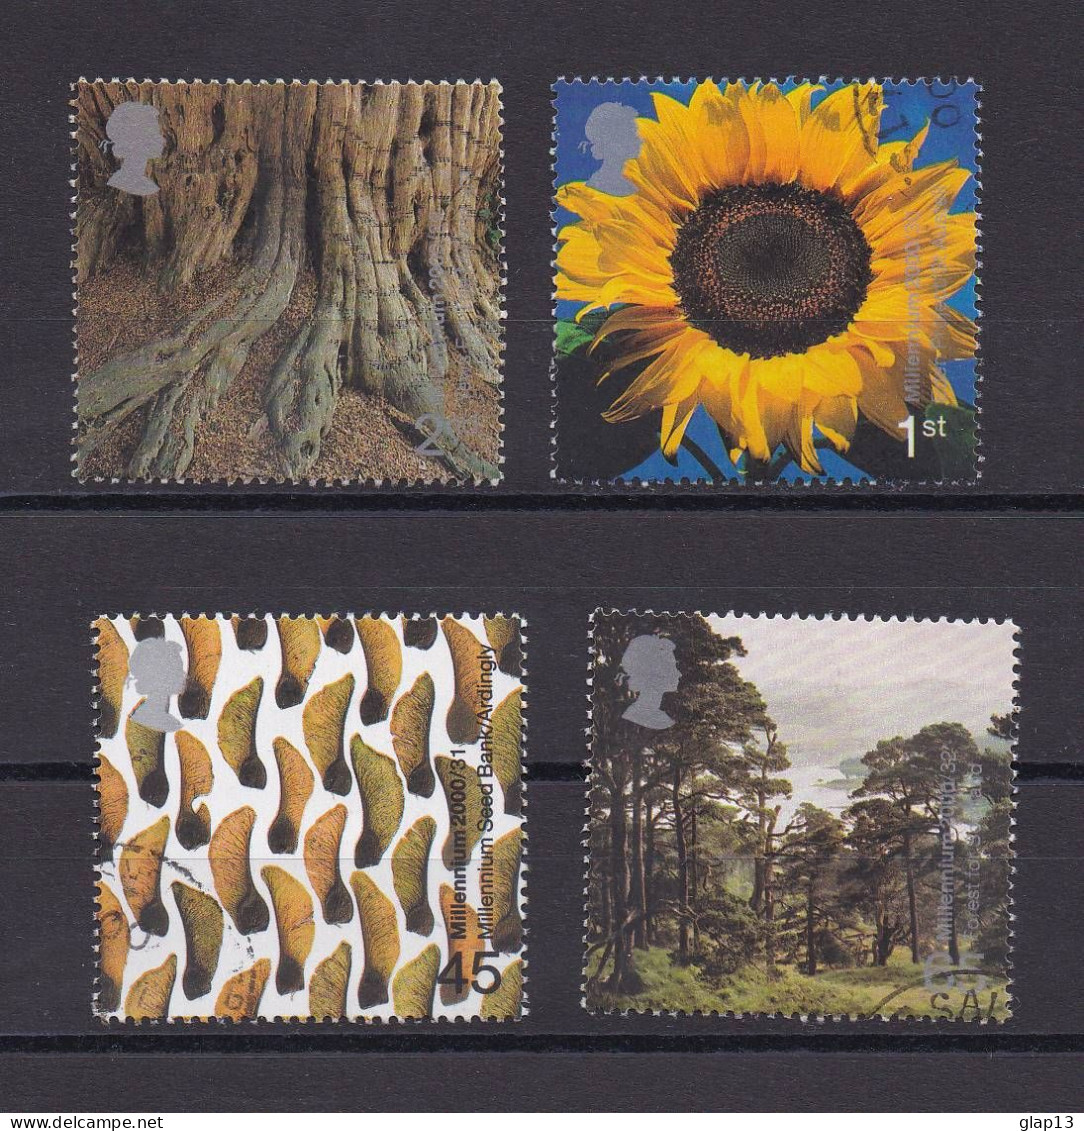 GRANDE-BRETAGNE 2000 TIMBRE N°2191/94 OBLITERE NOUVEAU MILLENAIRE - Used Stamps